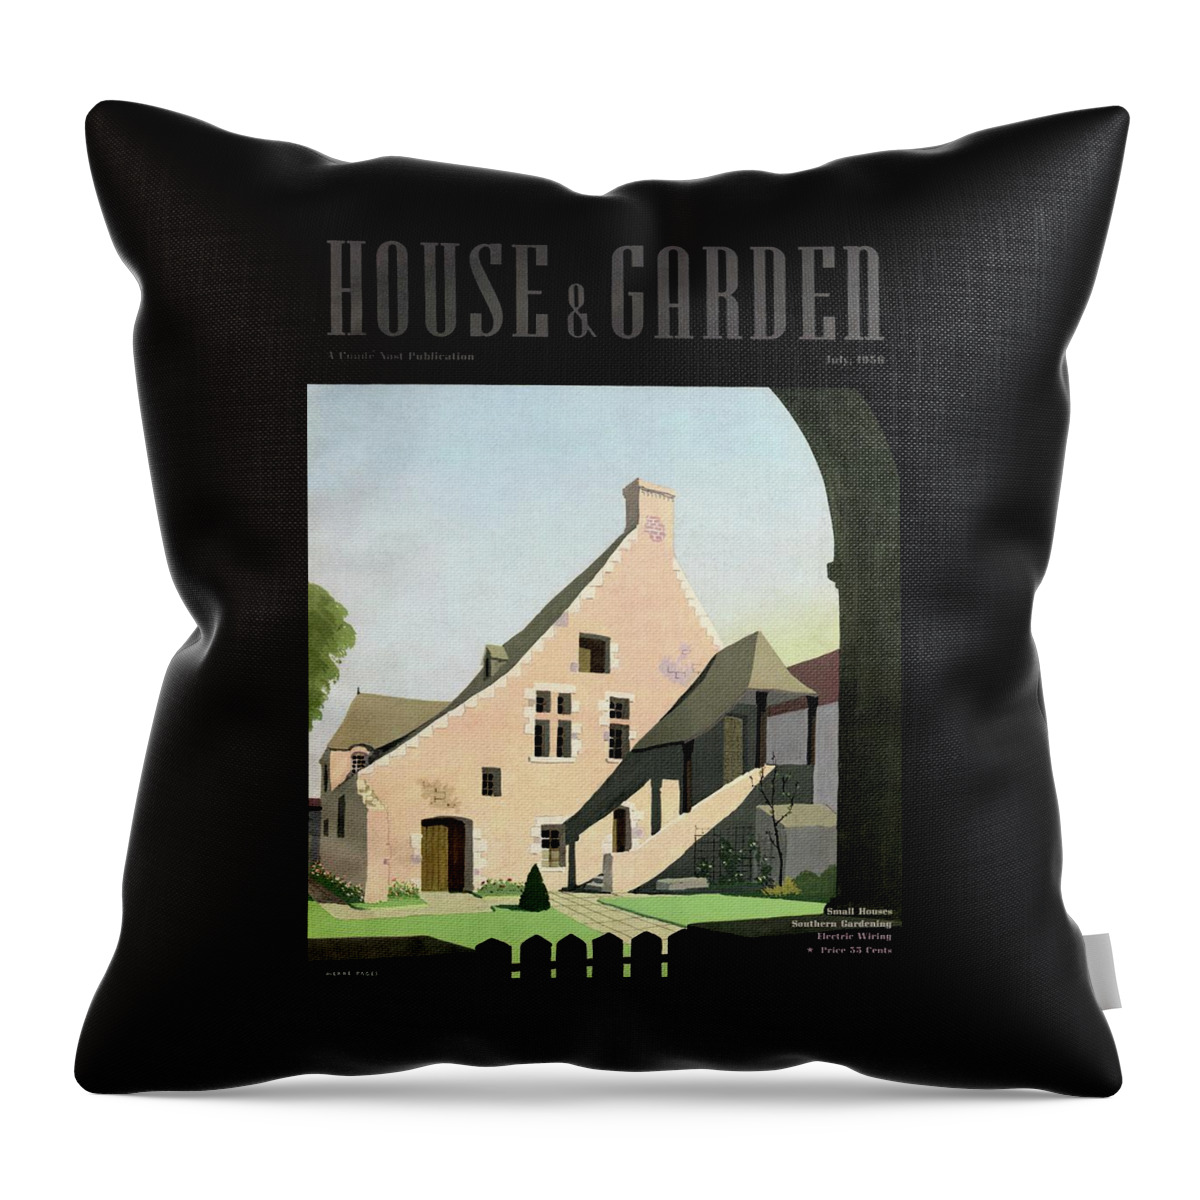 House & Garden Cover Illustration Of An Historic Throw Pillow